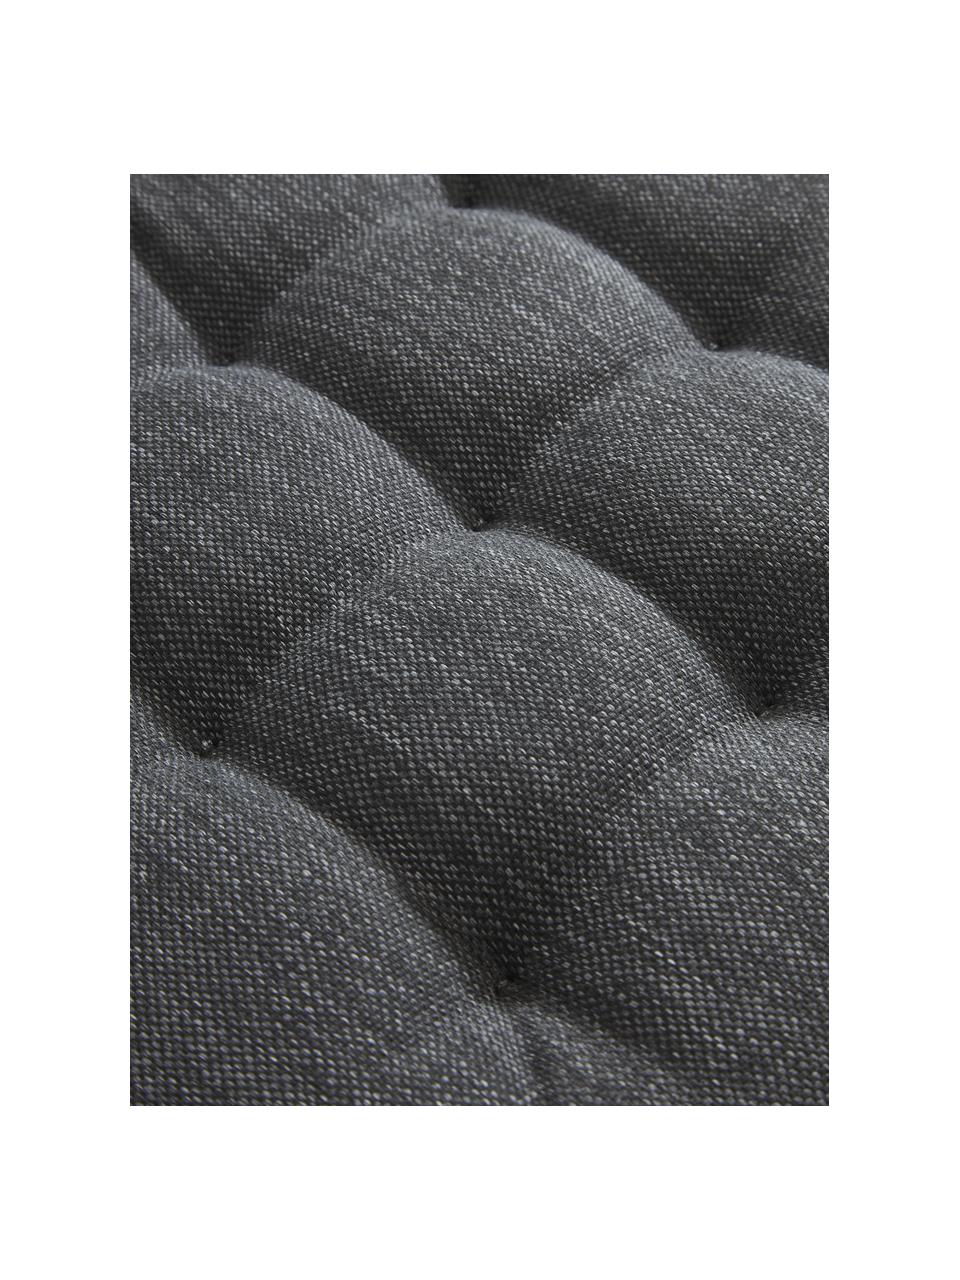 Cojín de asiento para exterior Olef, 100% algodón, Gris oscuro, An 40 x L 40 cm